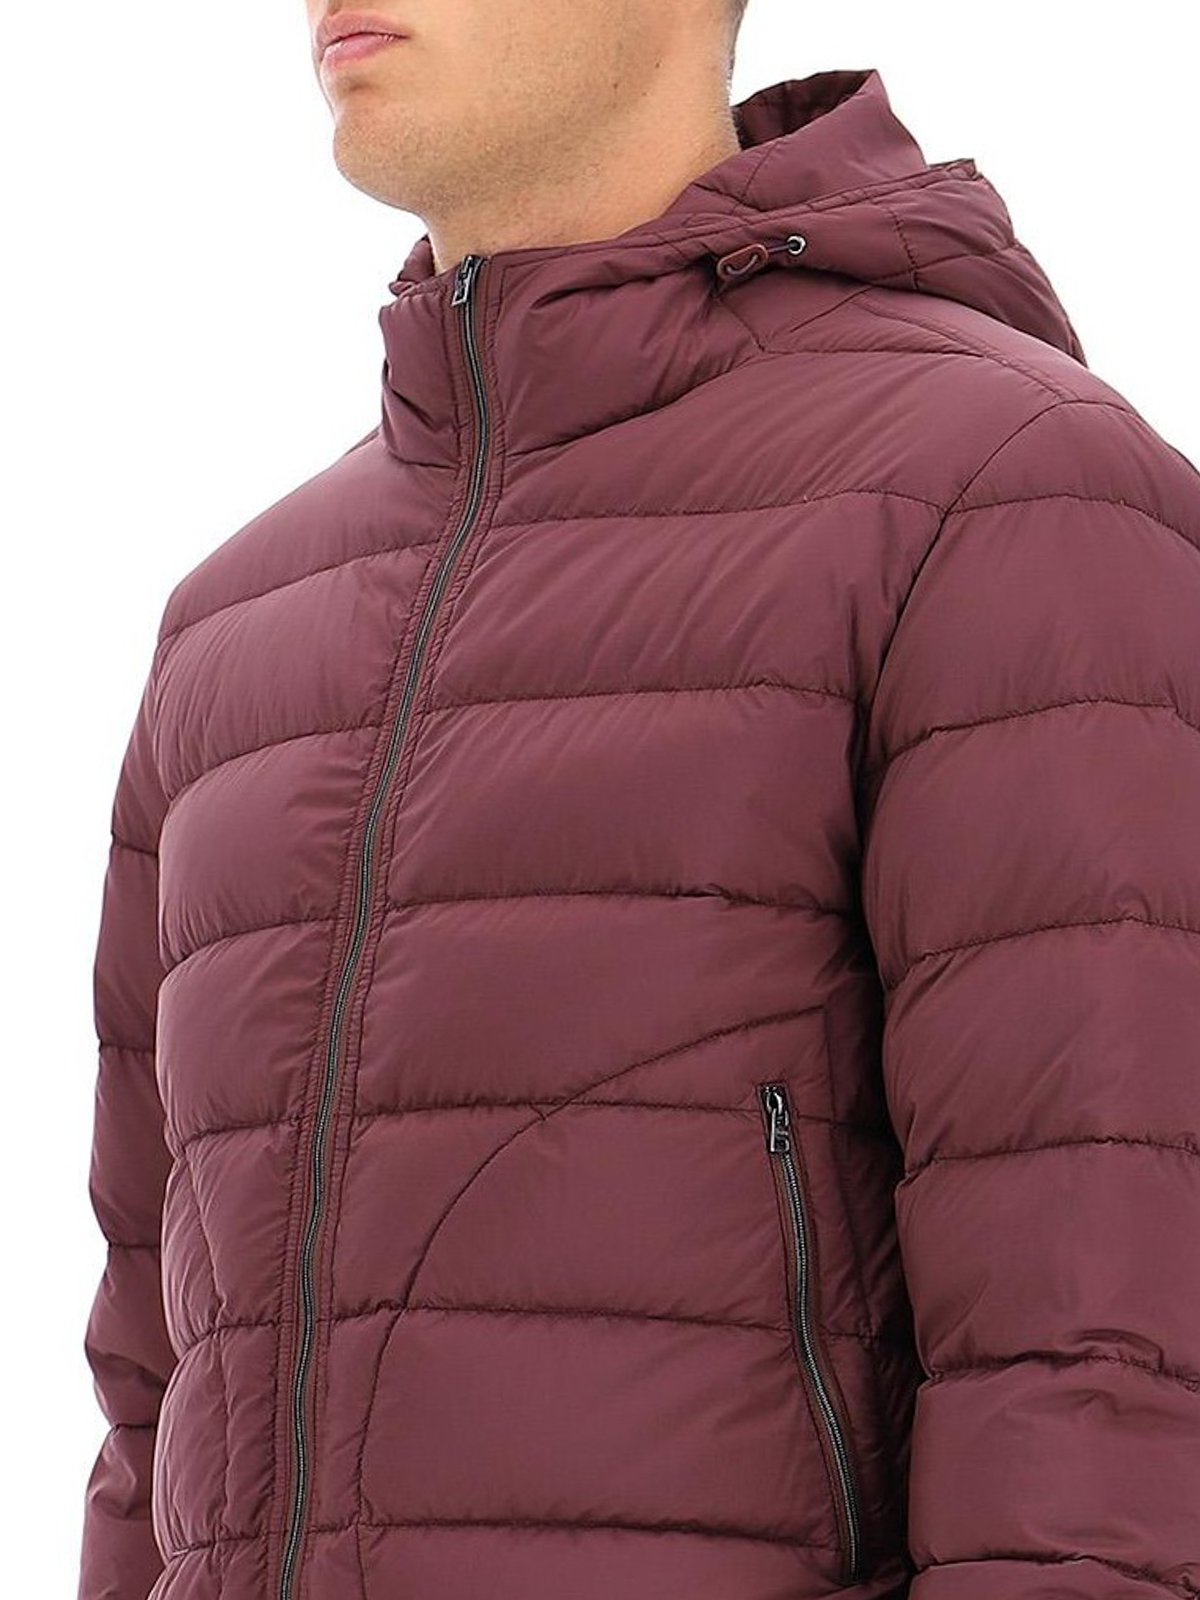 burgundy puffer jacket